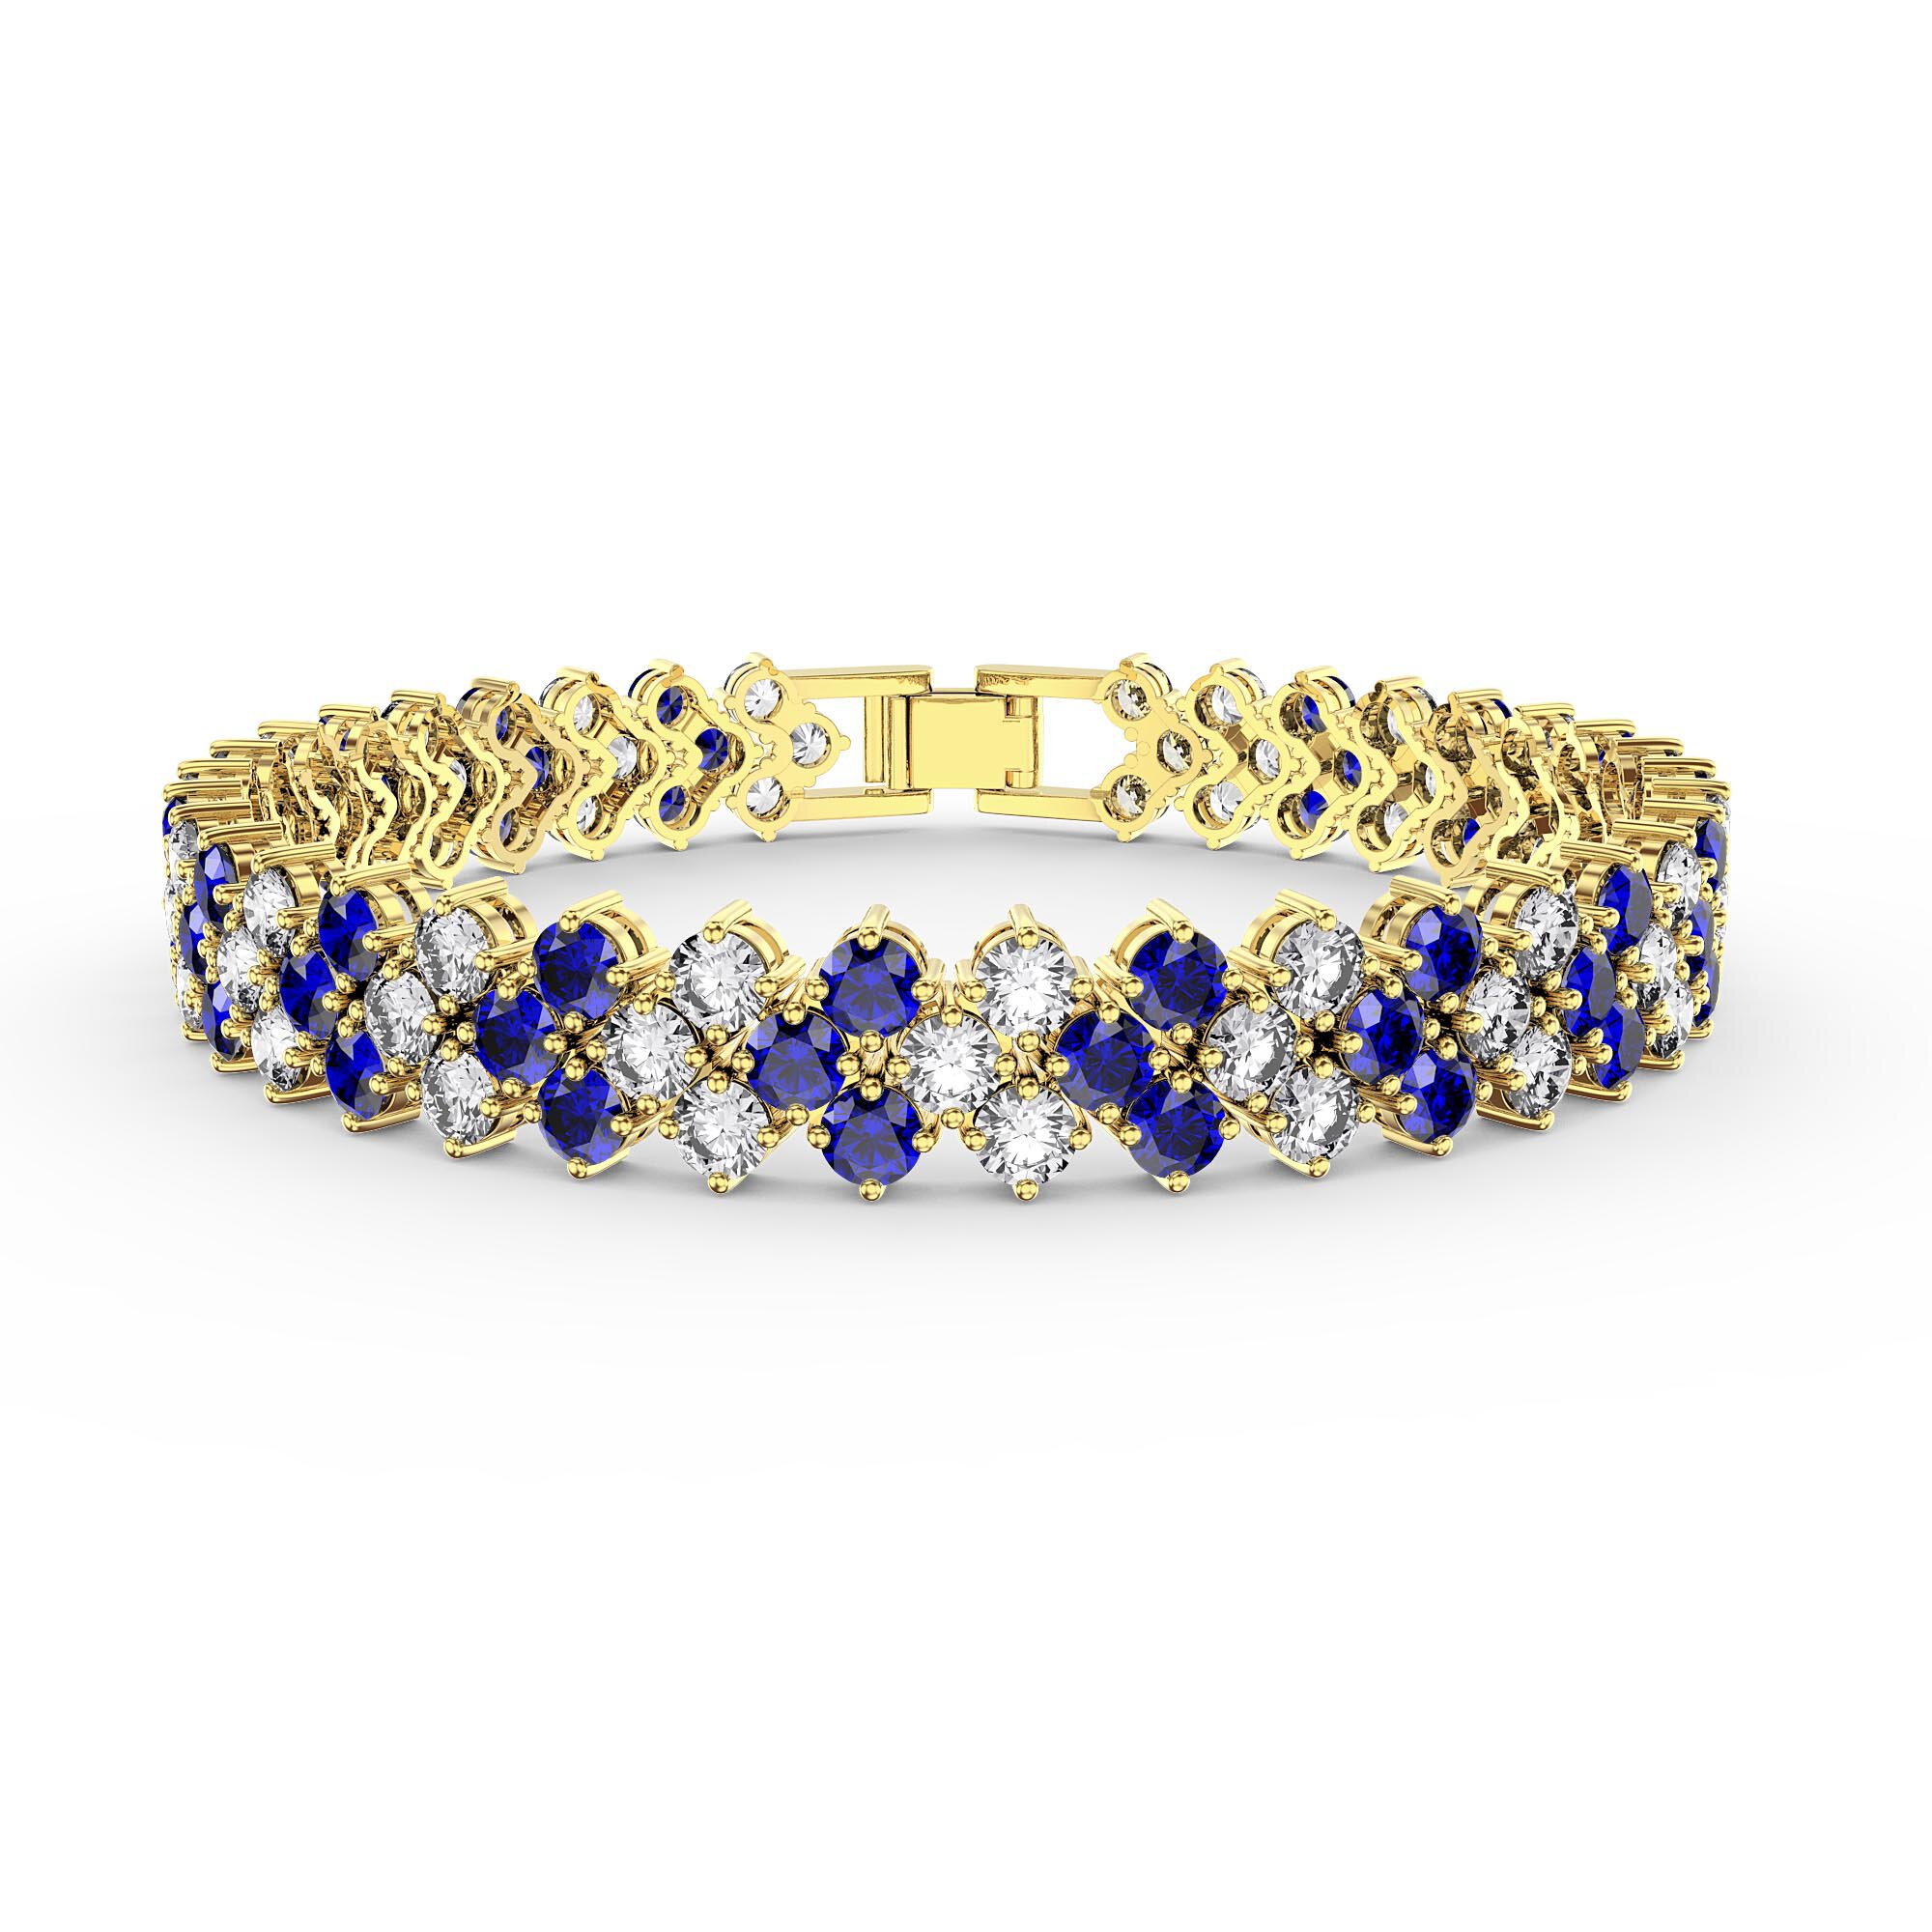 3ct Diamond Tennis Bracelet Claw Set in 9K White Gold